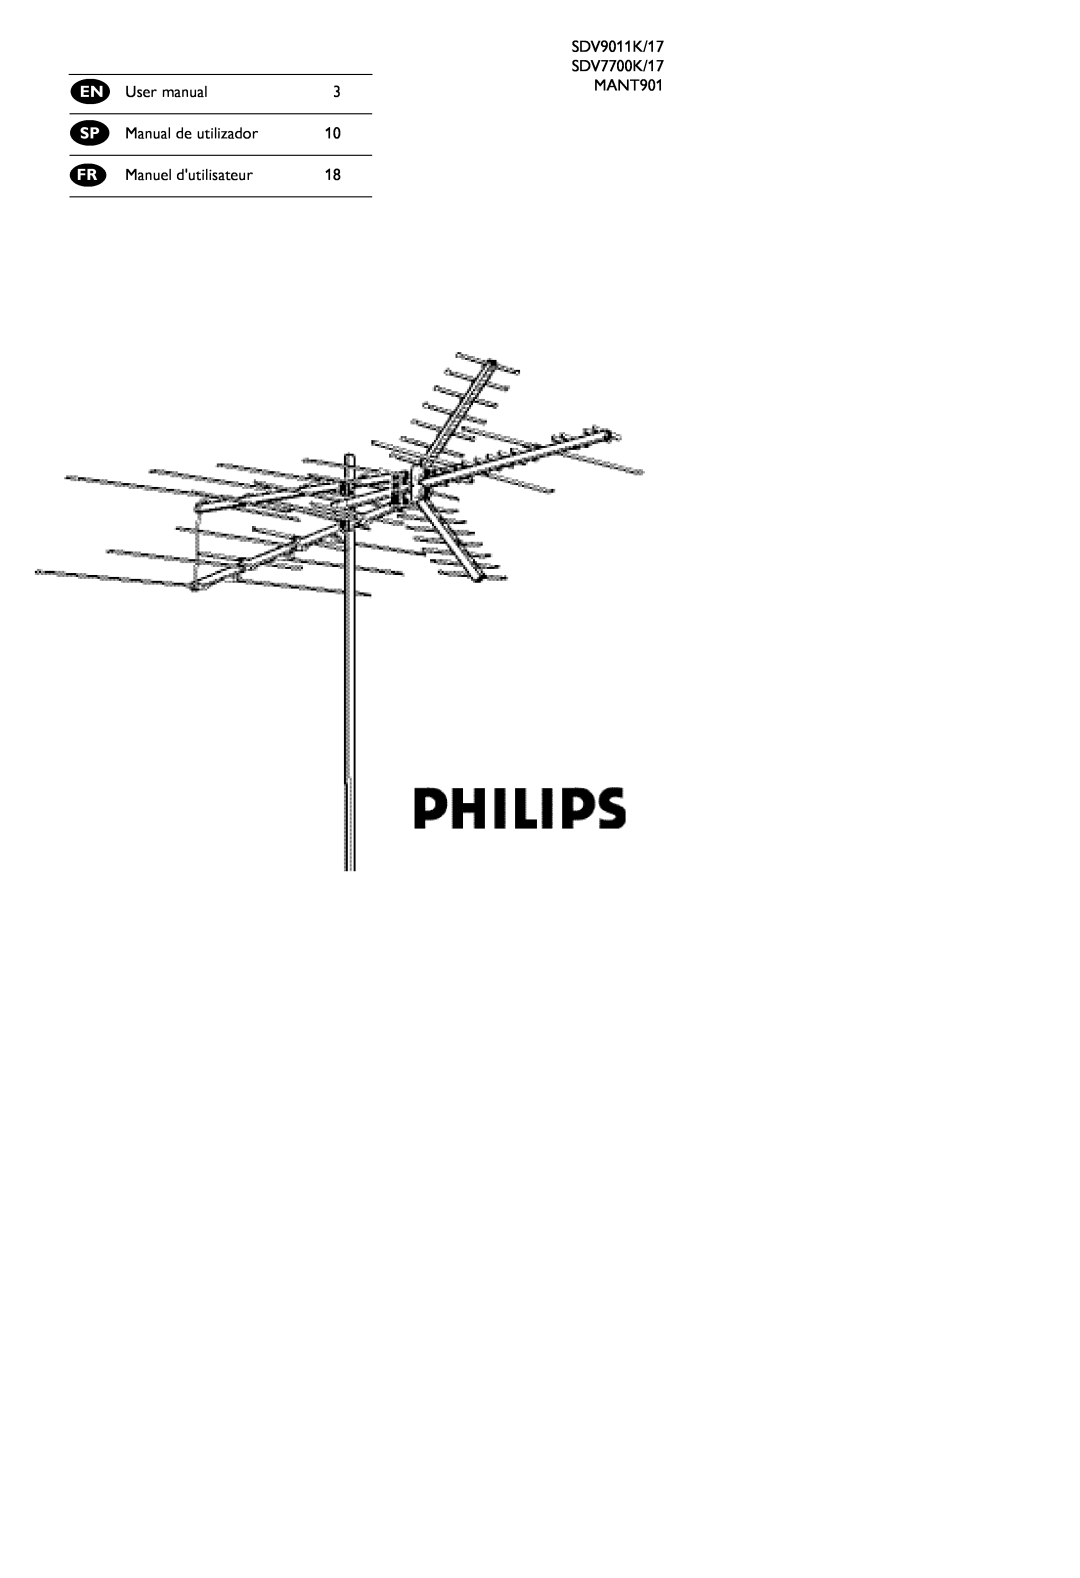 Philips SDV7700K/17 user manual SDV9011K/17, Manual de utilizador, Manuel dutilisateur, MANT901 